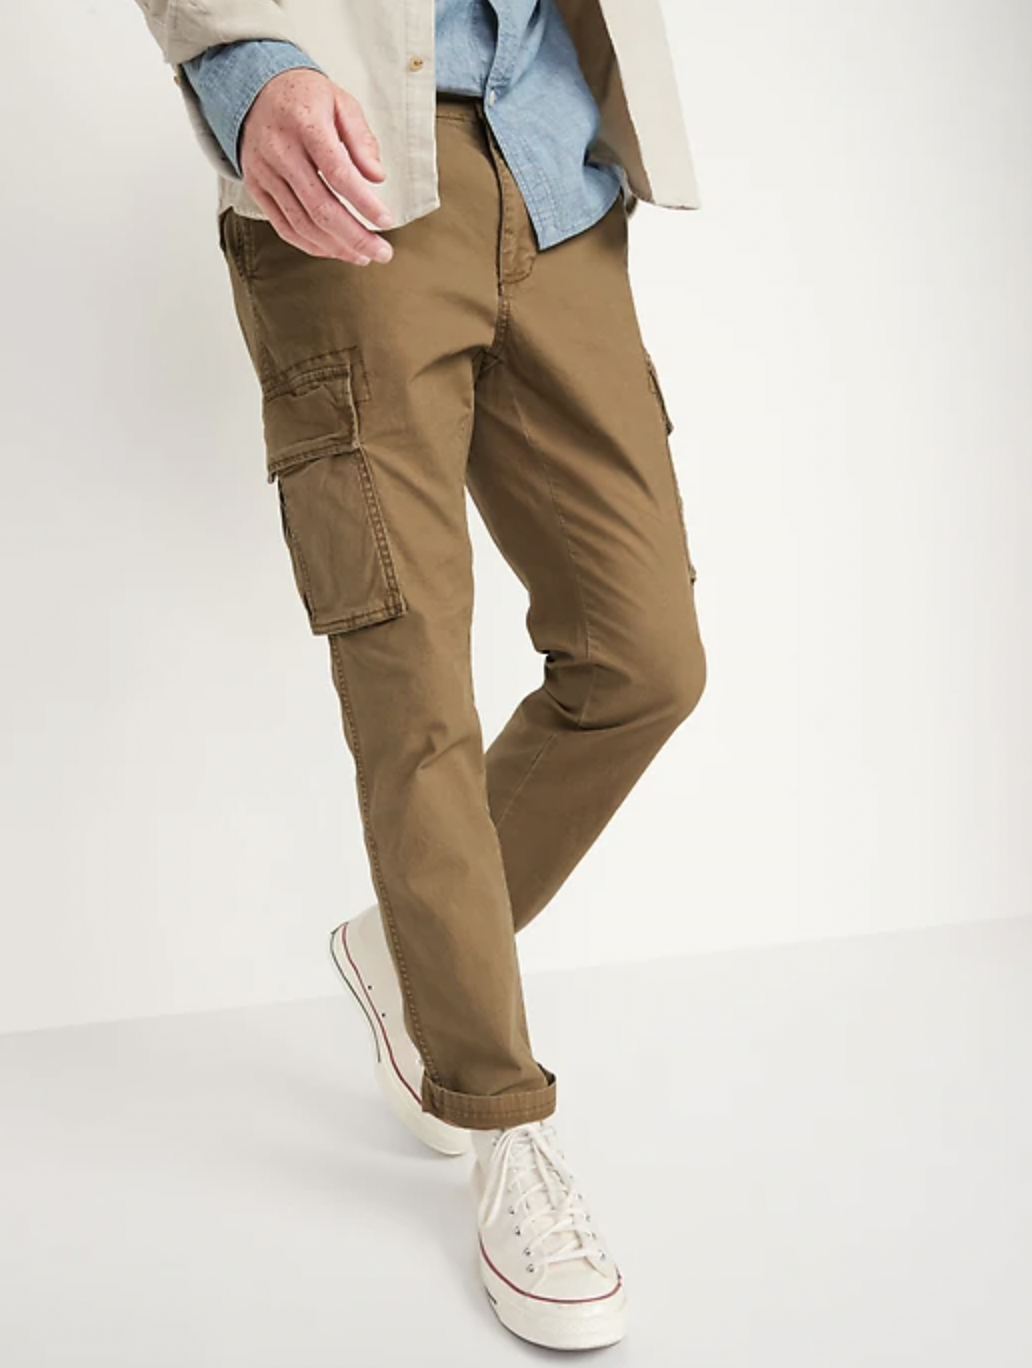 discount 70% Brown 44                  EU Easy Wear slacks MEN FASHION Trousers Basic 